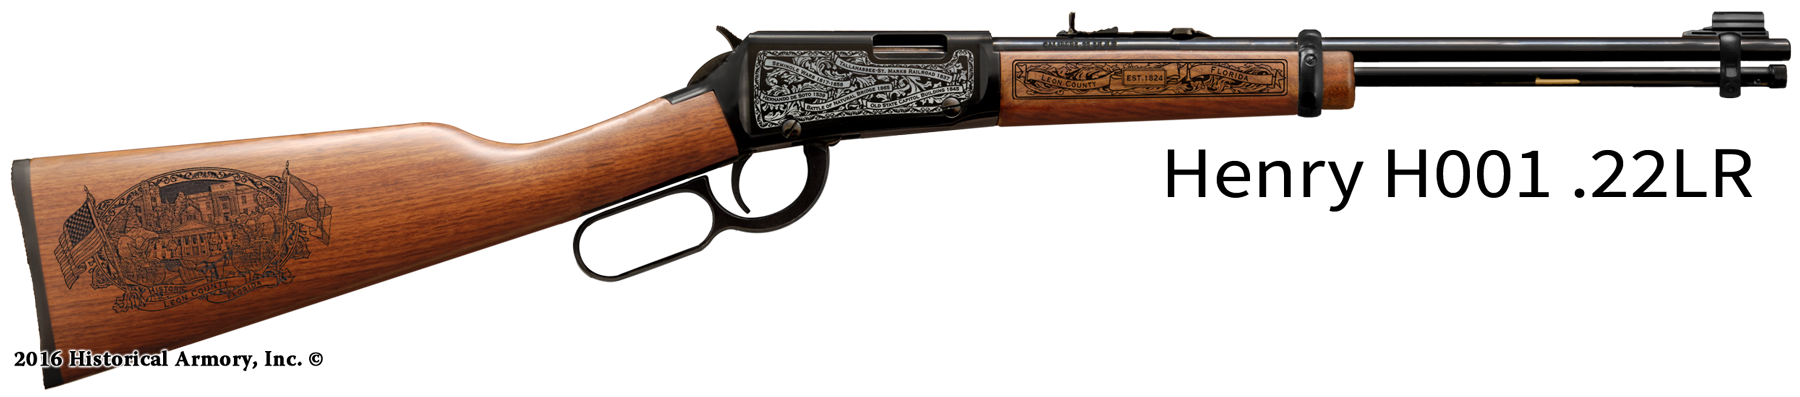 Leon County Florida Engraved Rifle